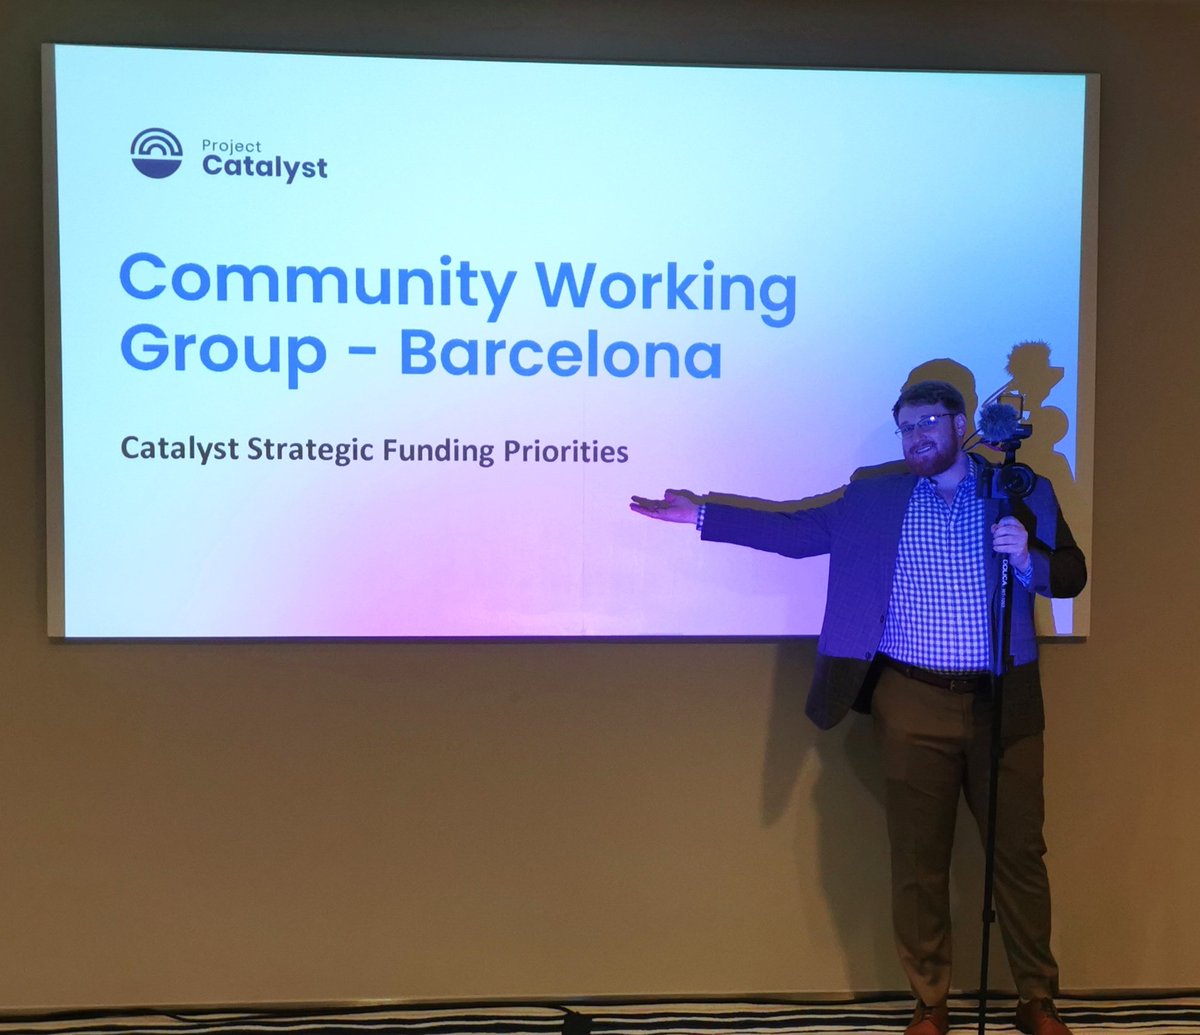 Catalyst Fund 12 Launch Event im Barcelona has officially kicked off! @bigezdaddy2017 @cole_vt @MauroAndreoliA @ParkParkinson @CardanoSpot @RareEvo @Catalyst_onX